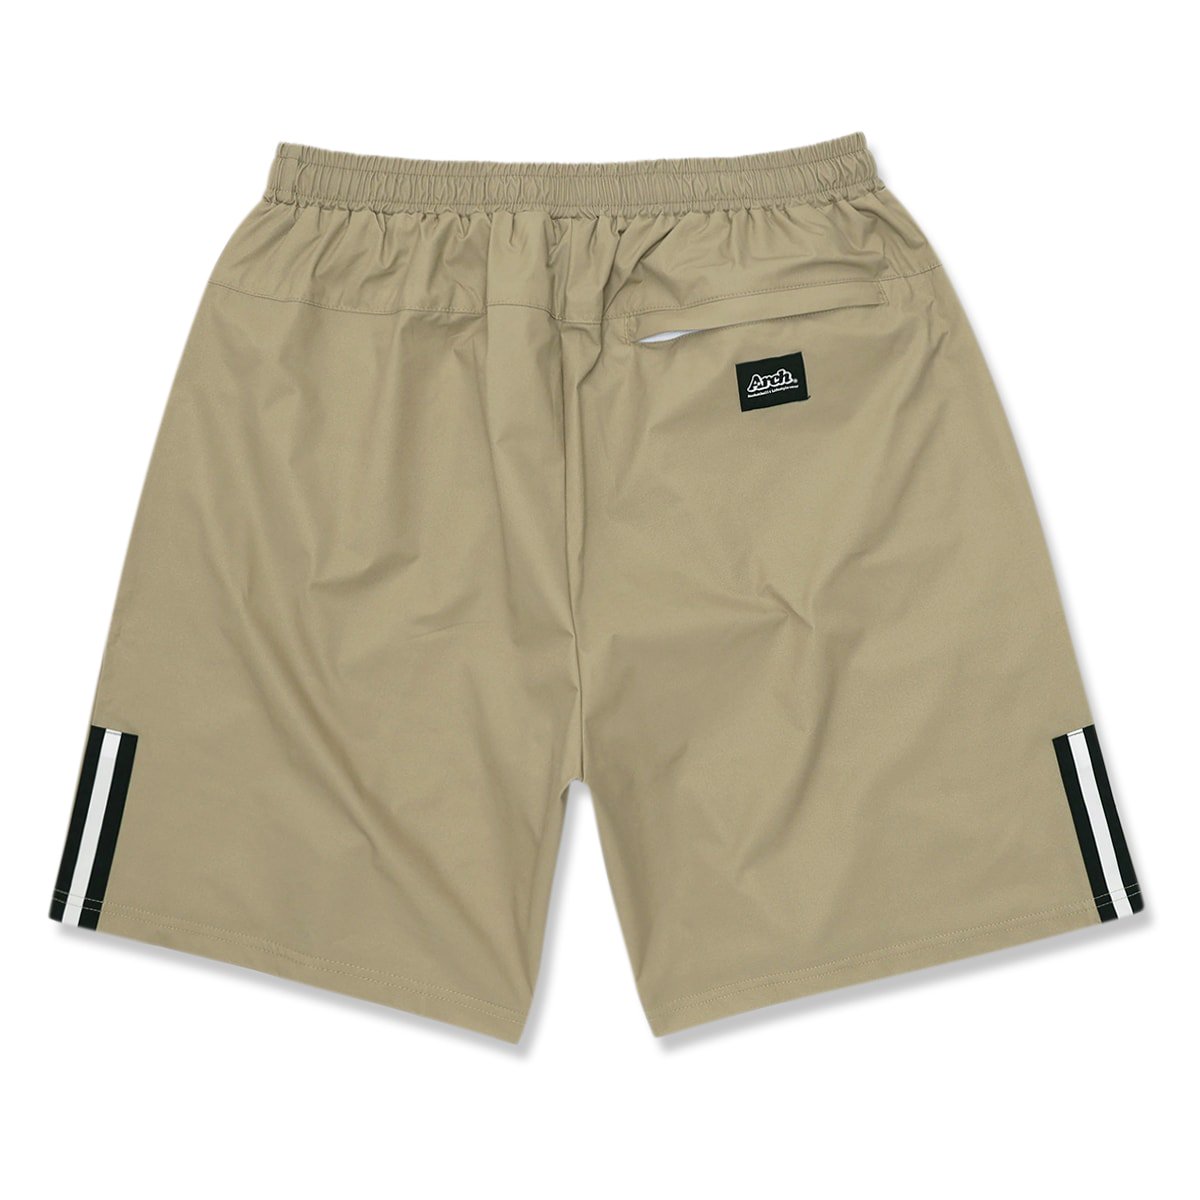 side drop shorts【sand khaki】 - Arch ☆ アーチ [バスケットボール ...